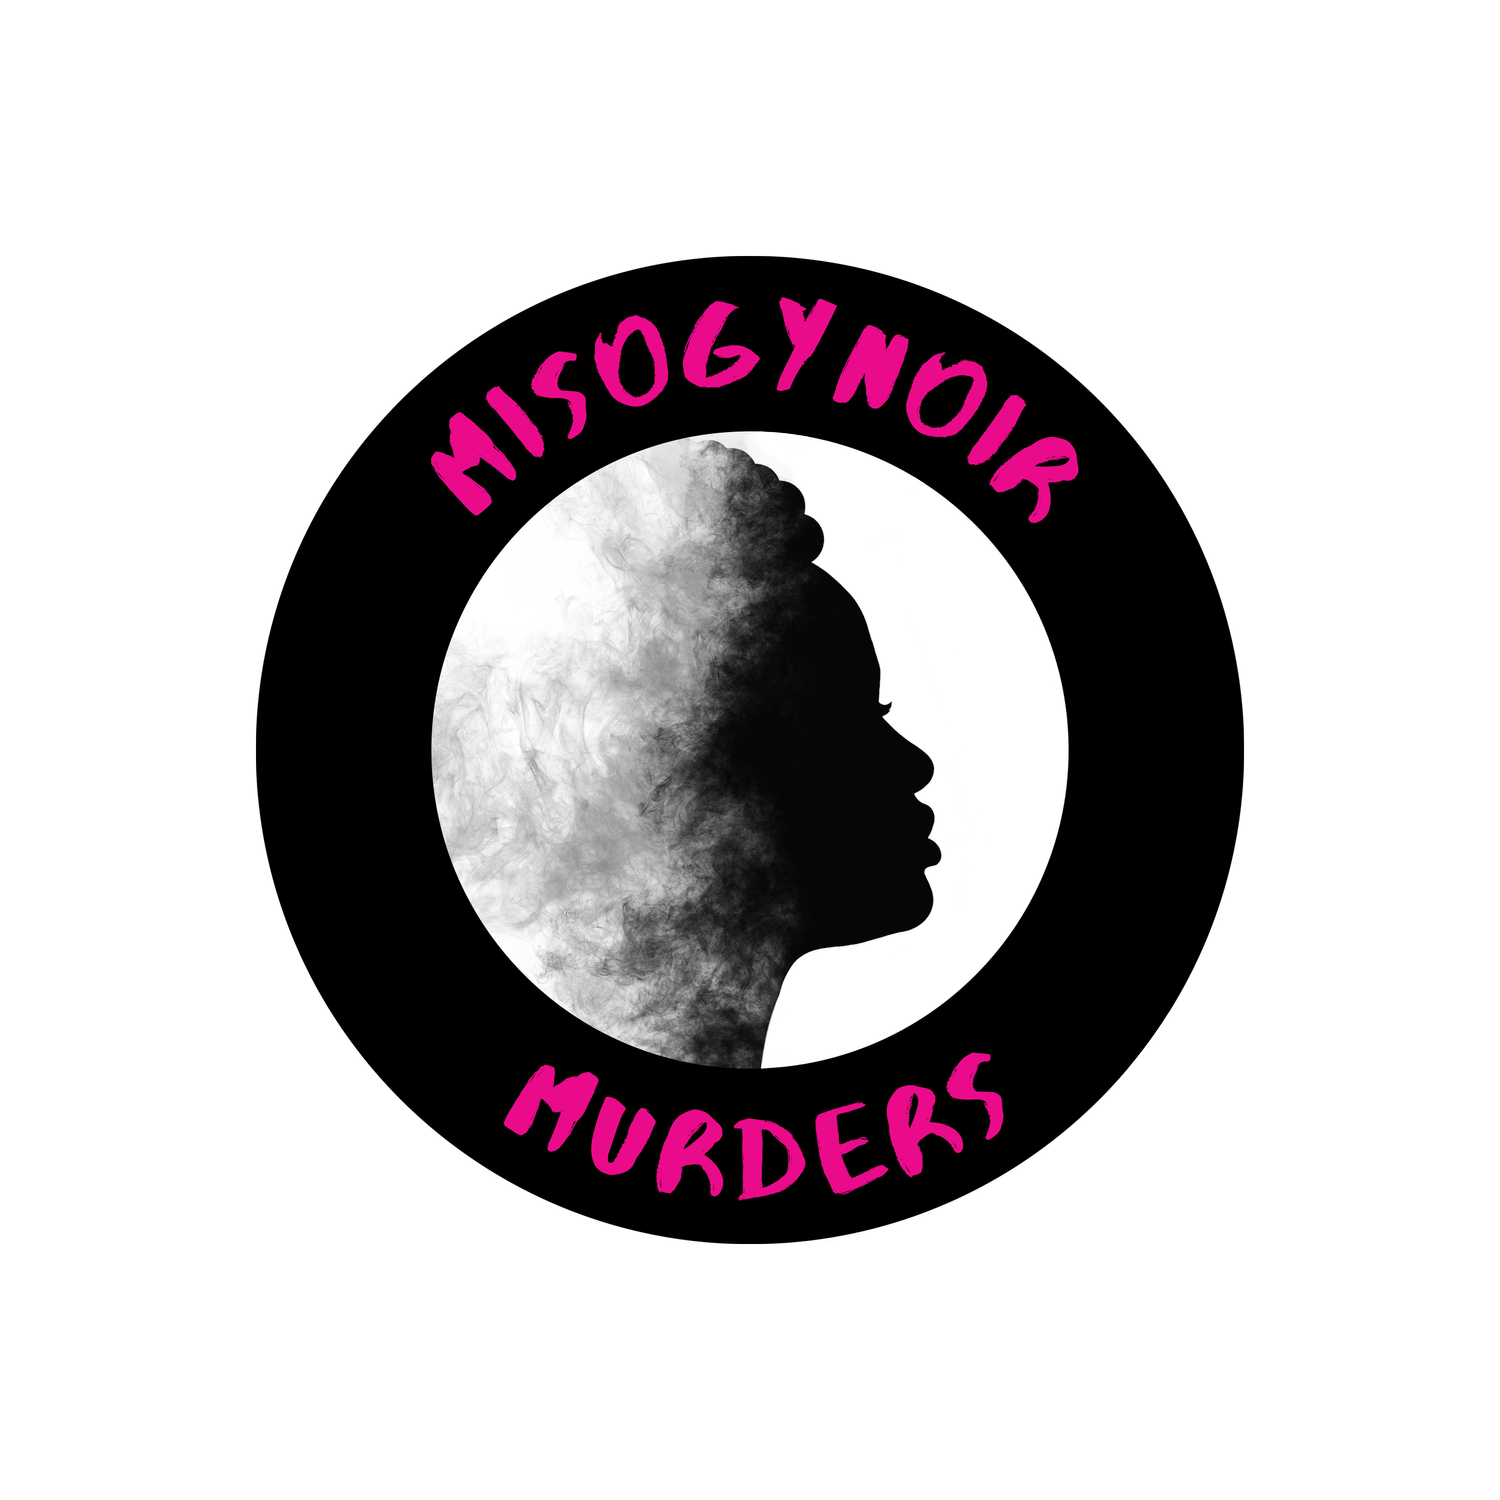 Misogynoir Murders